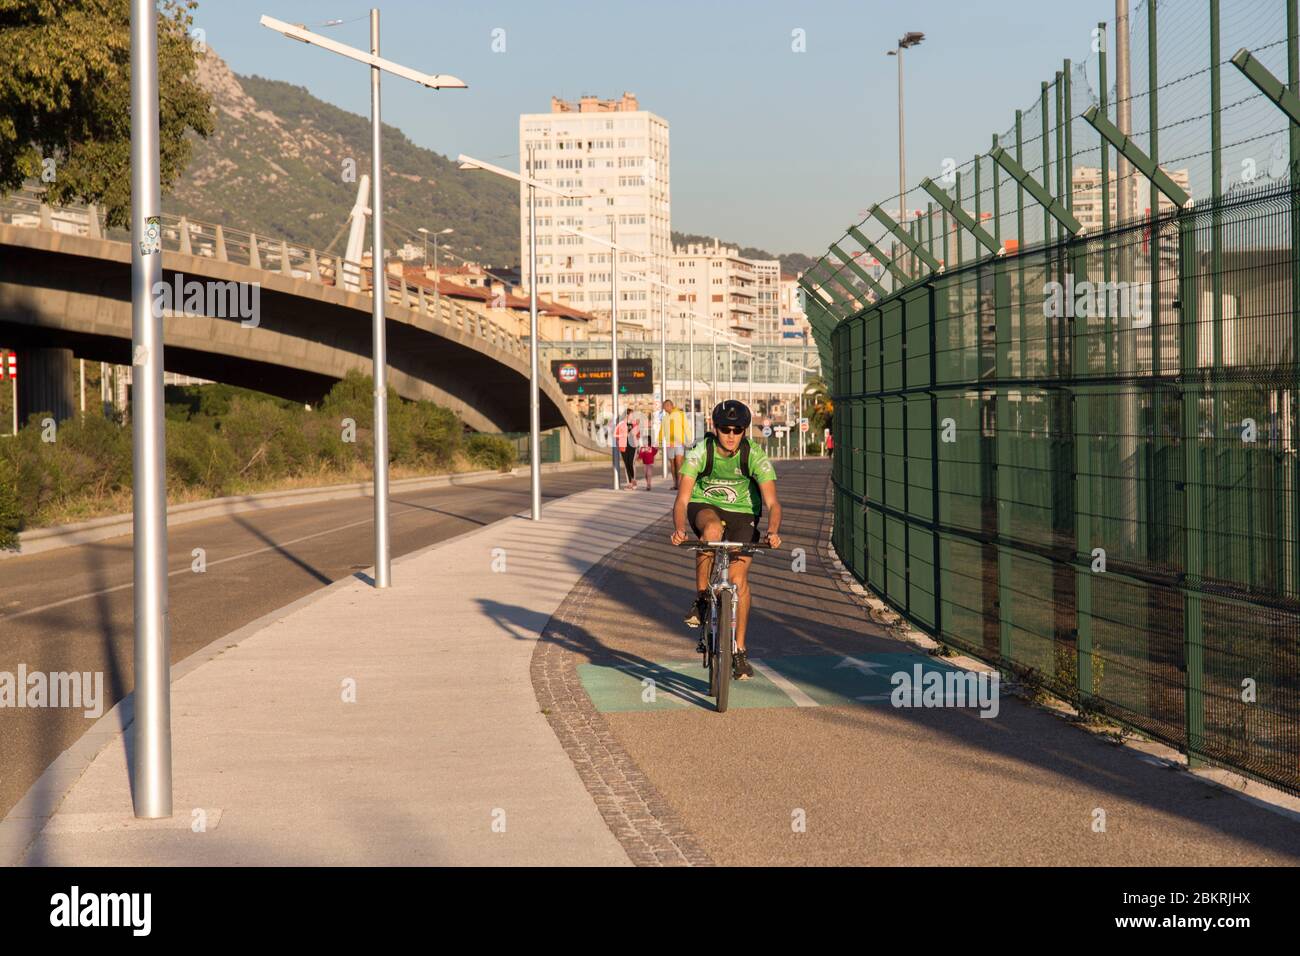 France, Var, Toulon, Bon Rencontre district, A50 motorway, Palais des Sports, cycling on cycle track Stock Photo